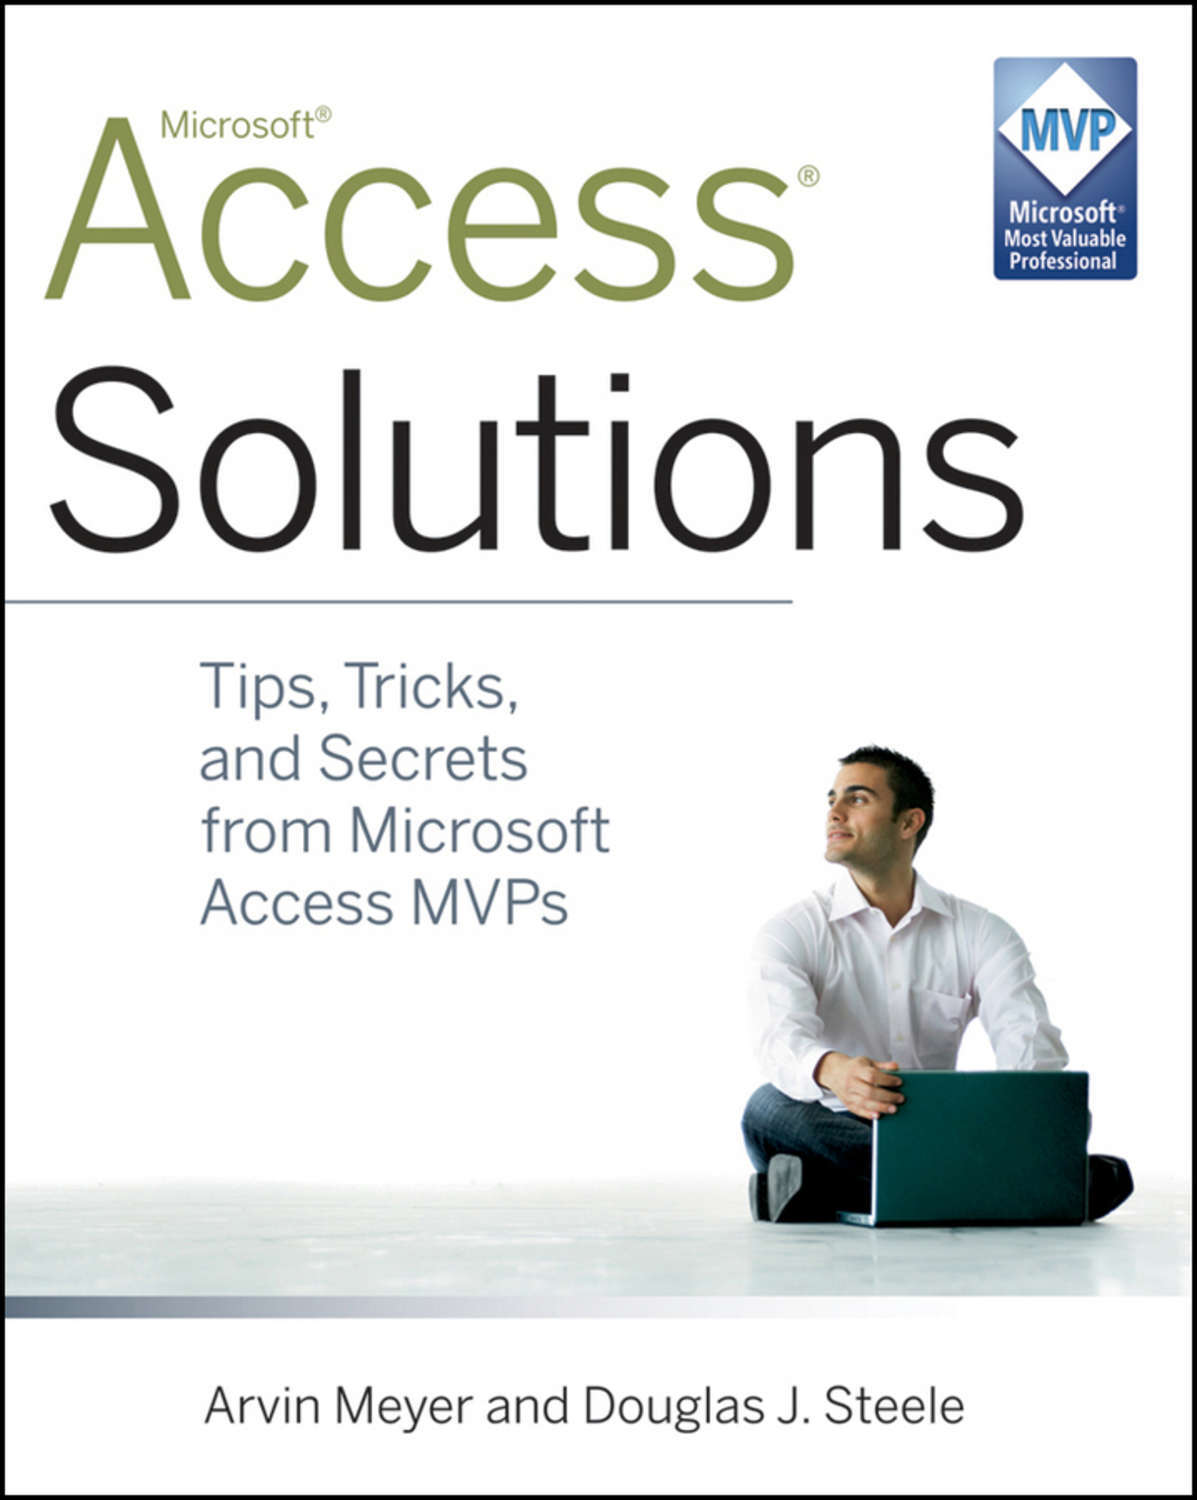 Книги access. Access solutions. Книги по access 2010. Книги по access 2010 Библия. Book access